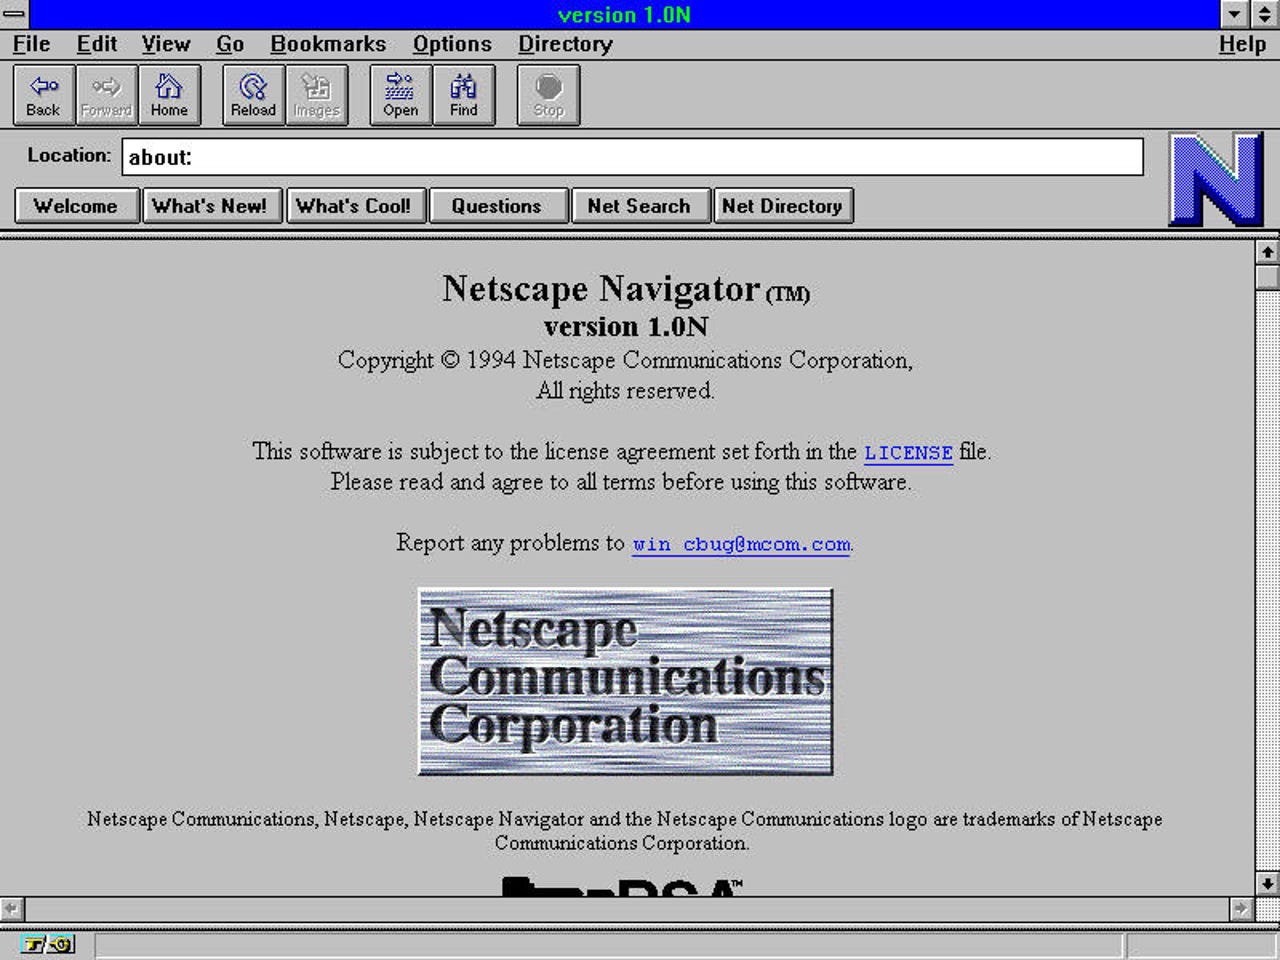 01-netscape-navigator-1994.jpg